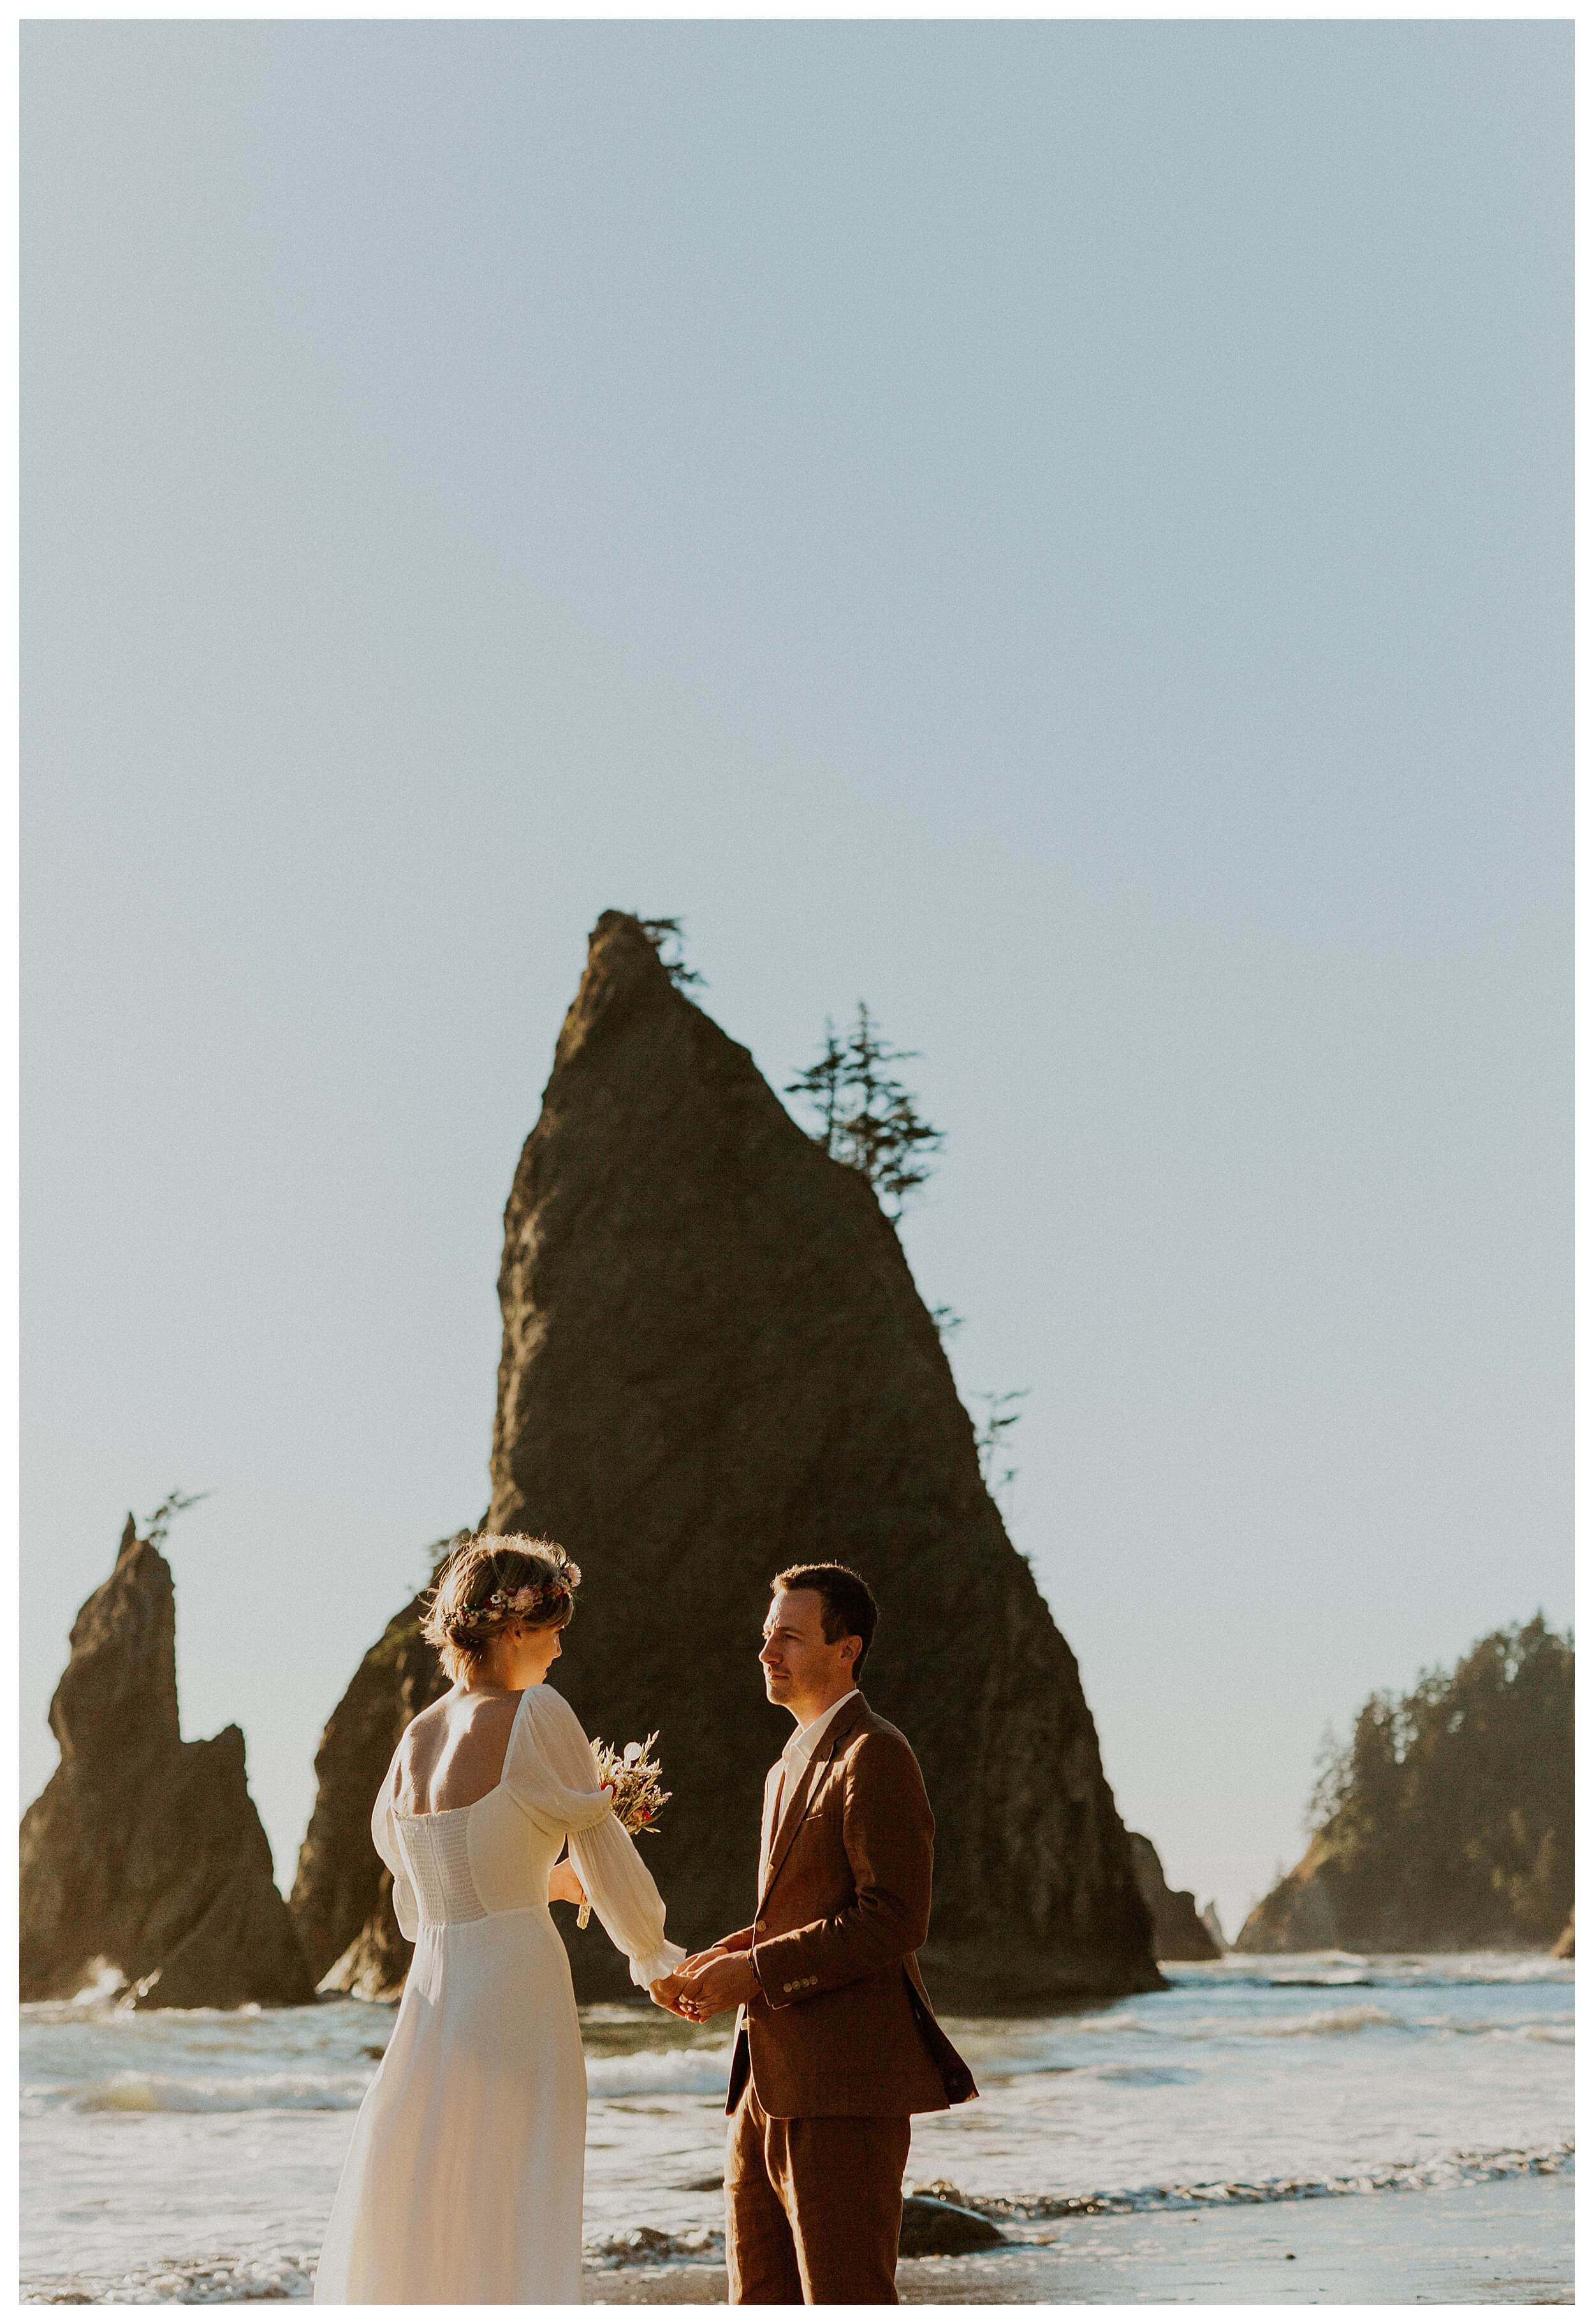 bride and groom holding hands rialto beach
 
